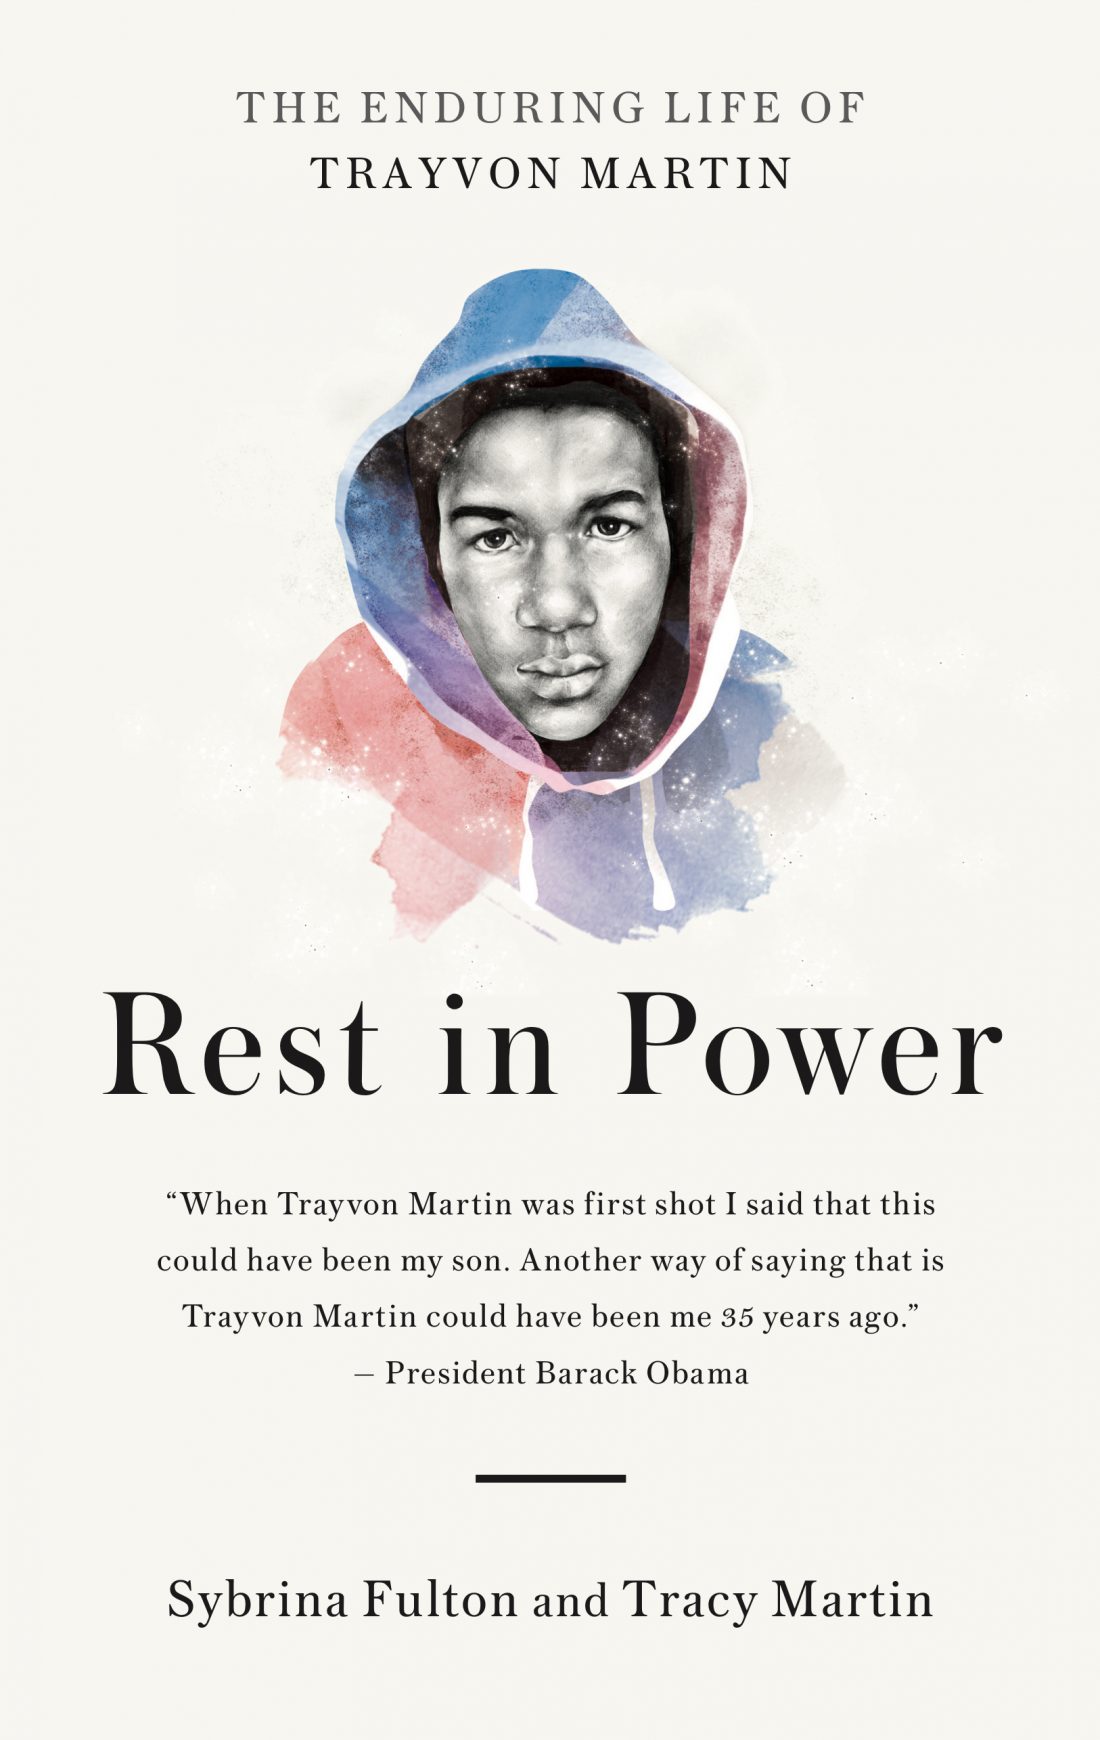 MelanMag - Trayvon Martin. Rest in Power: The enduring life of Trayvon Martin